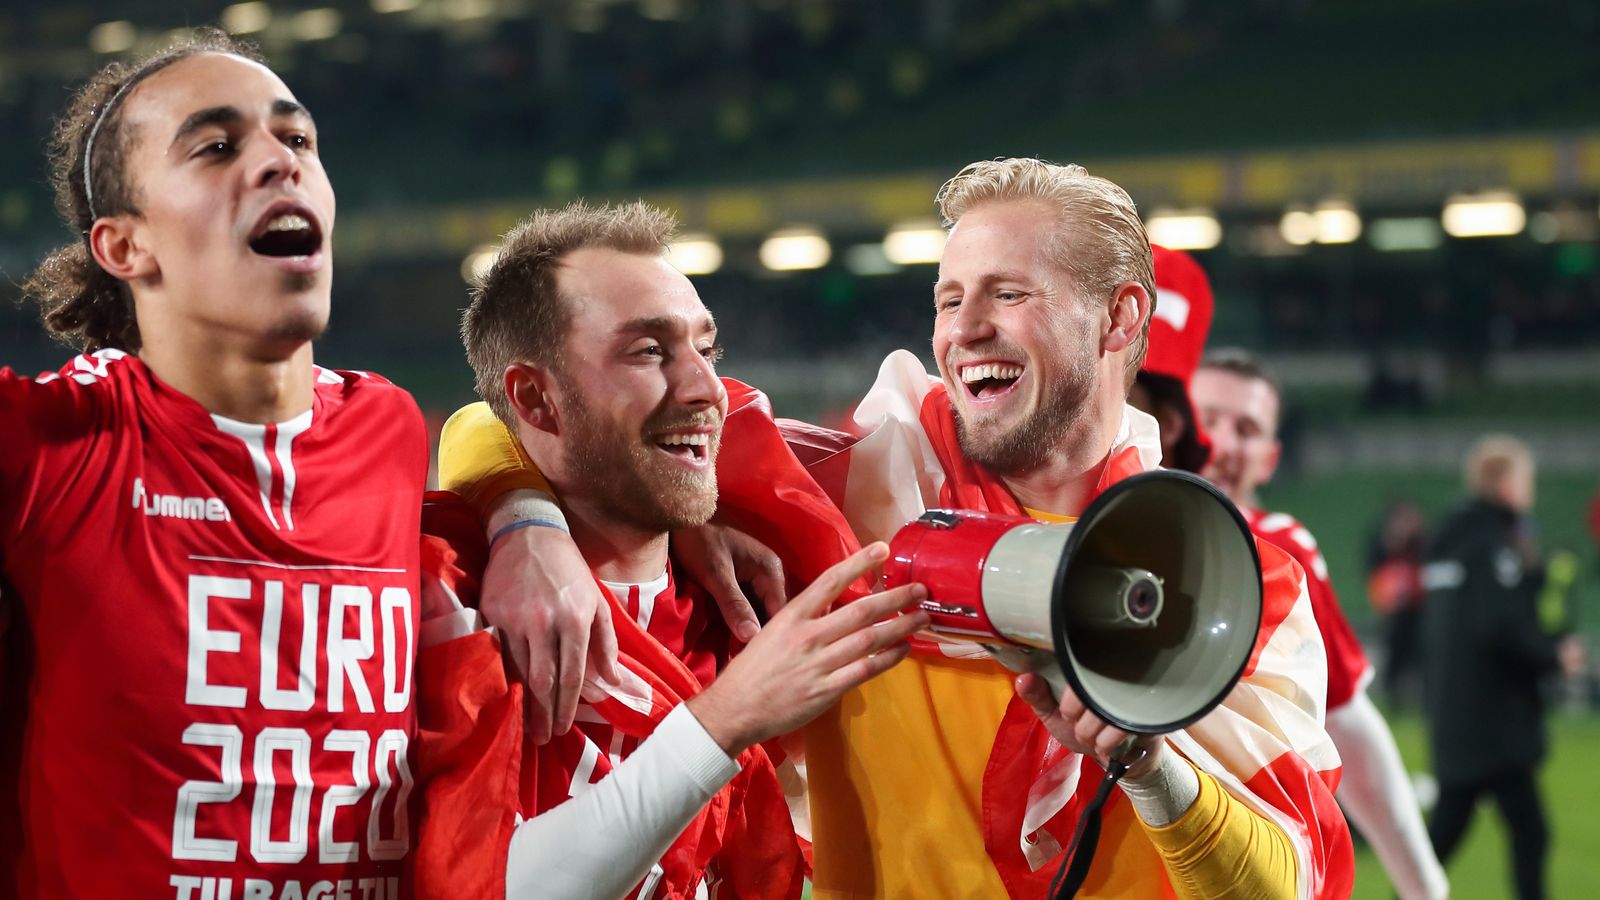 Euro 2020: Denmark Football Union reaches UEFA extension over host city Copenhagen | Football News | Sky Sports